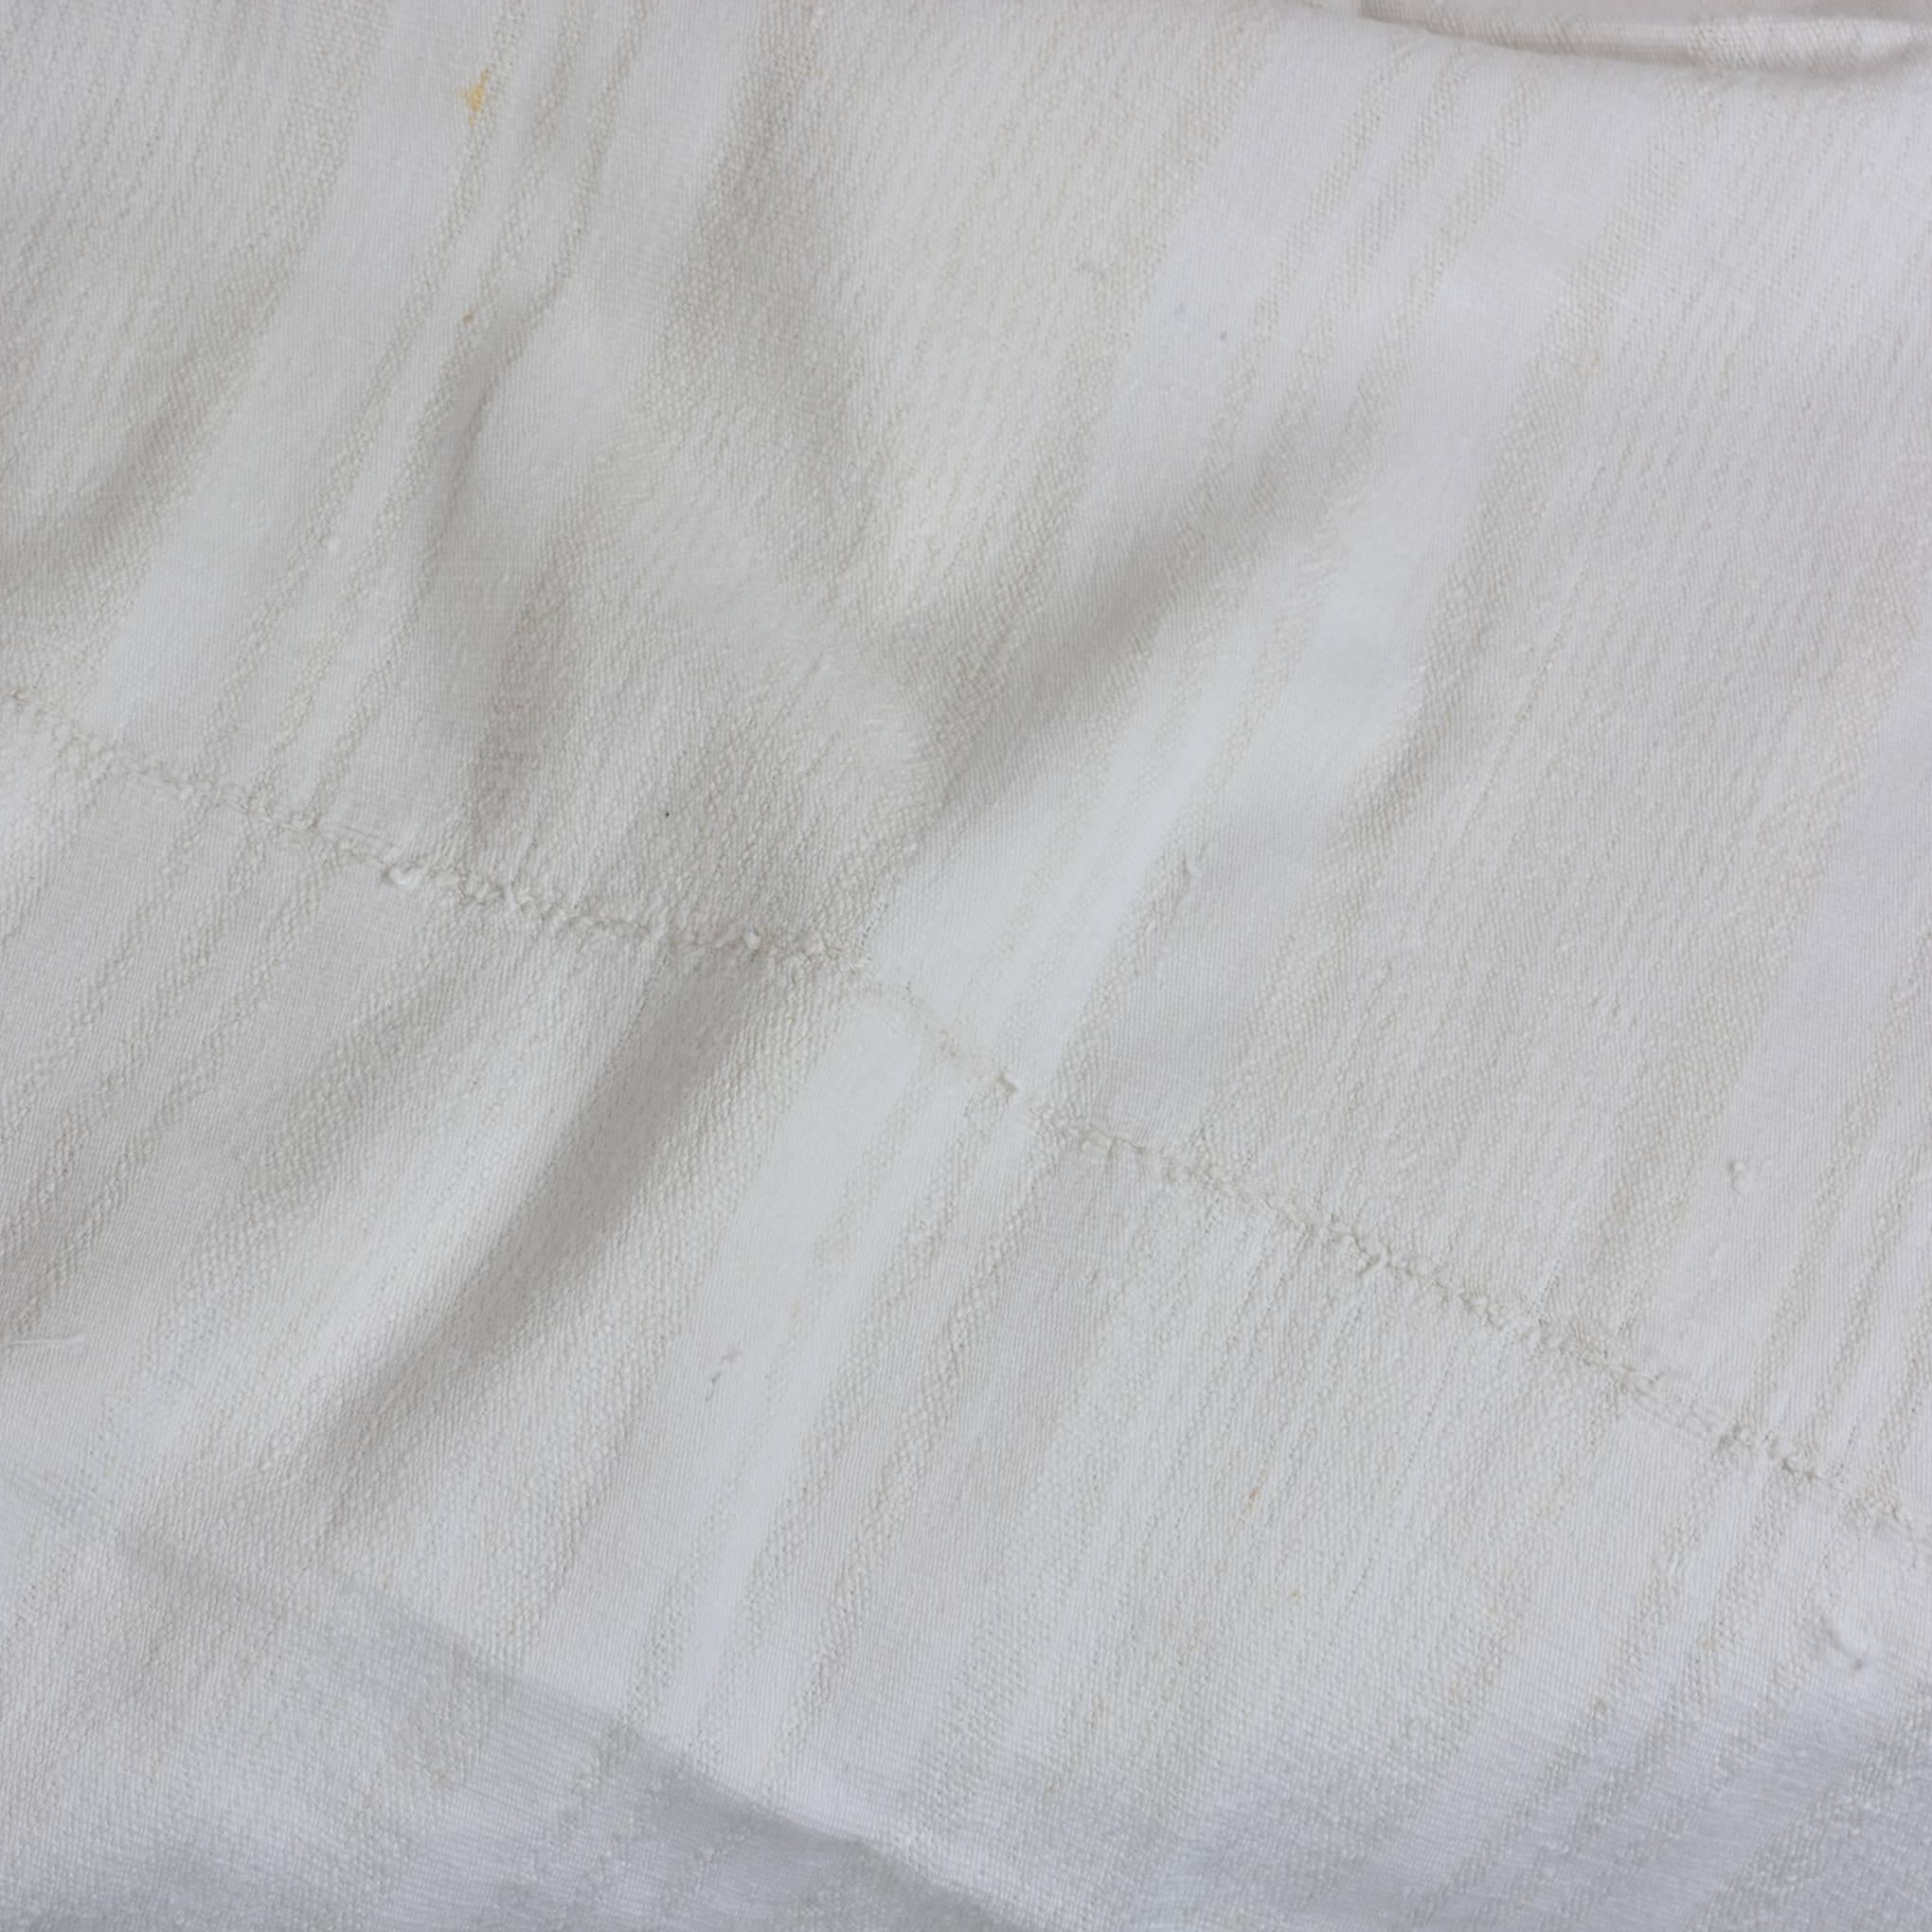 Hand-Woven Antique Handwoven Cotton Linen Coverlet